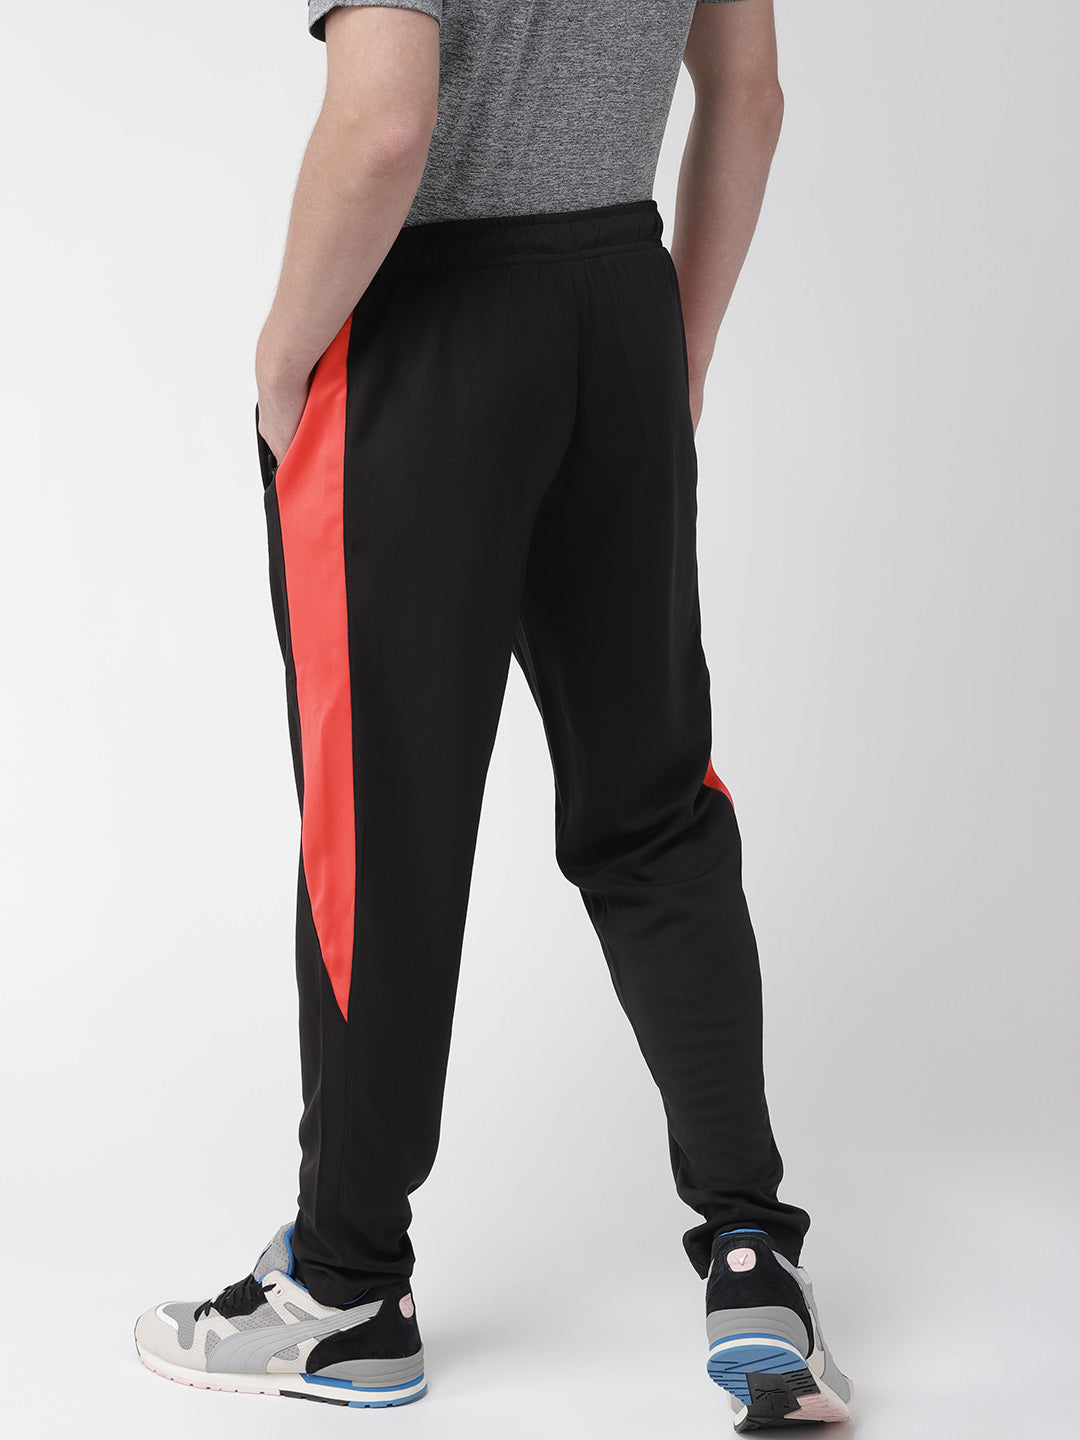 Alcis Men Black  Red Slim Fit Solid Running Track Pants